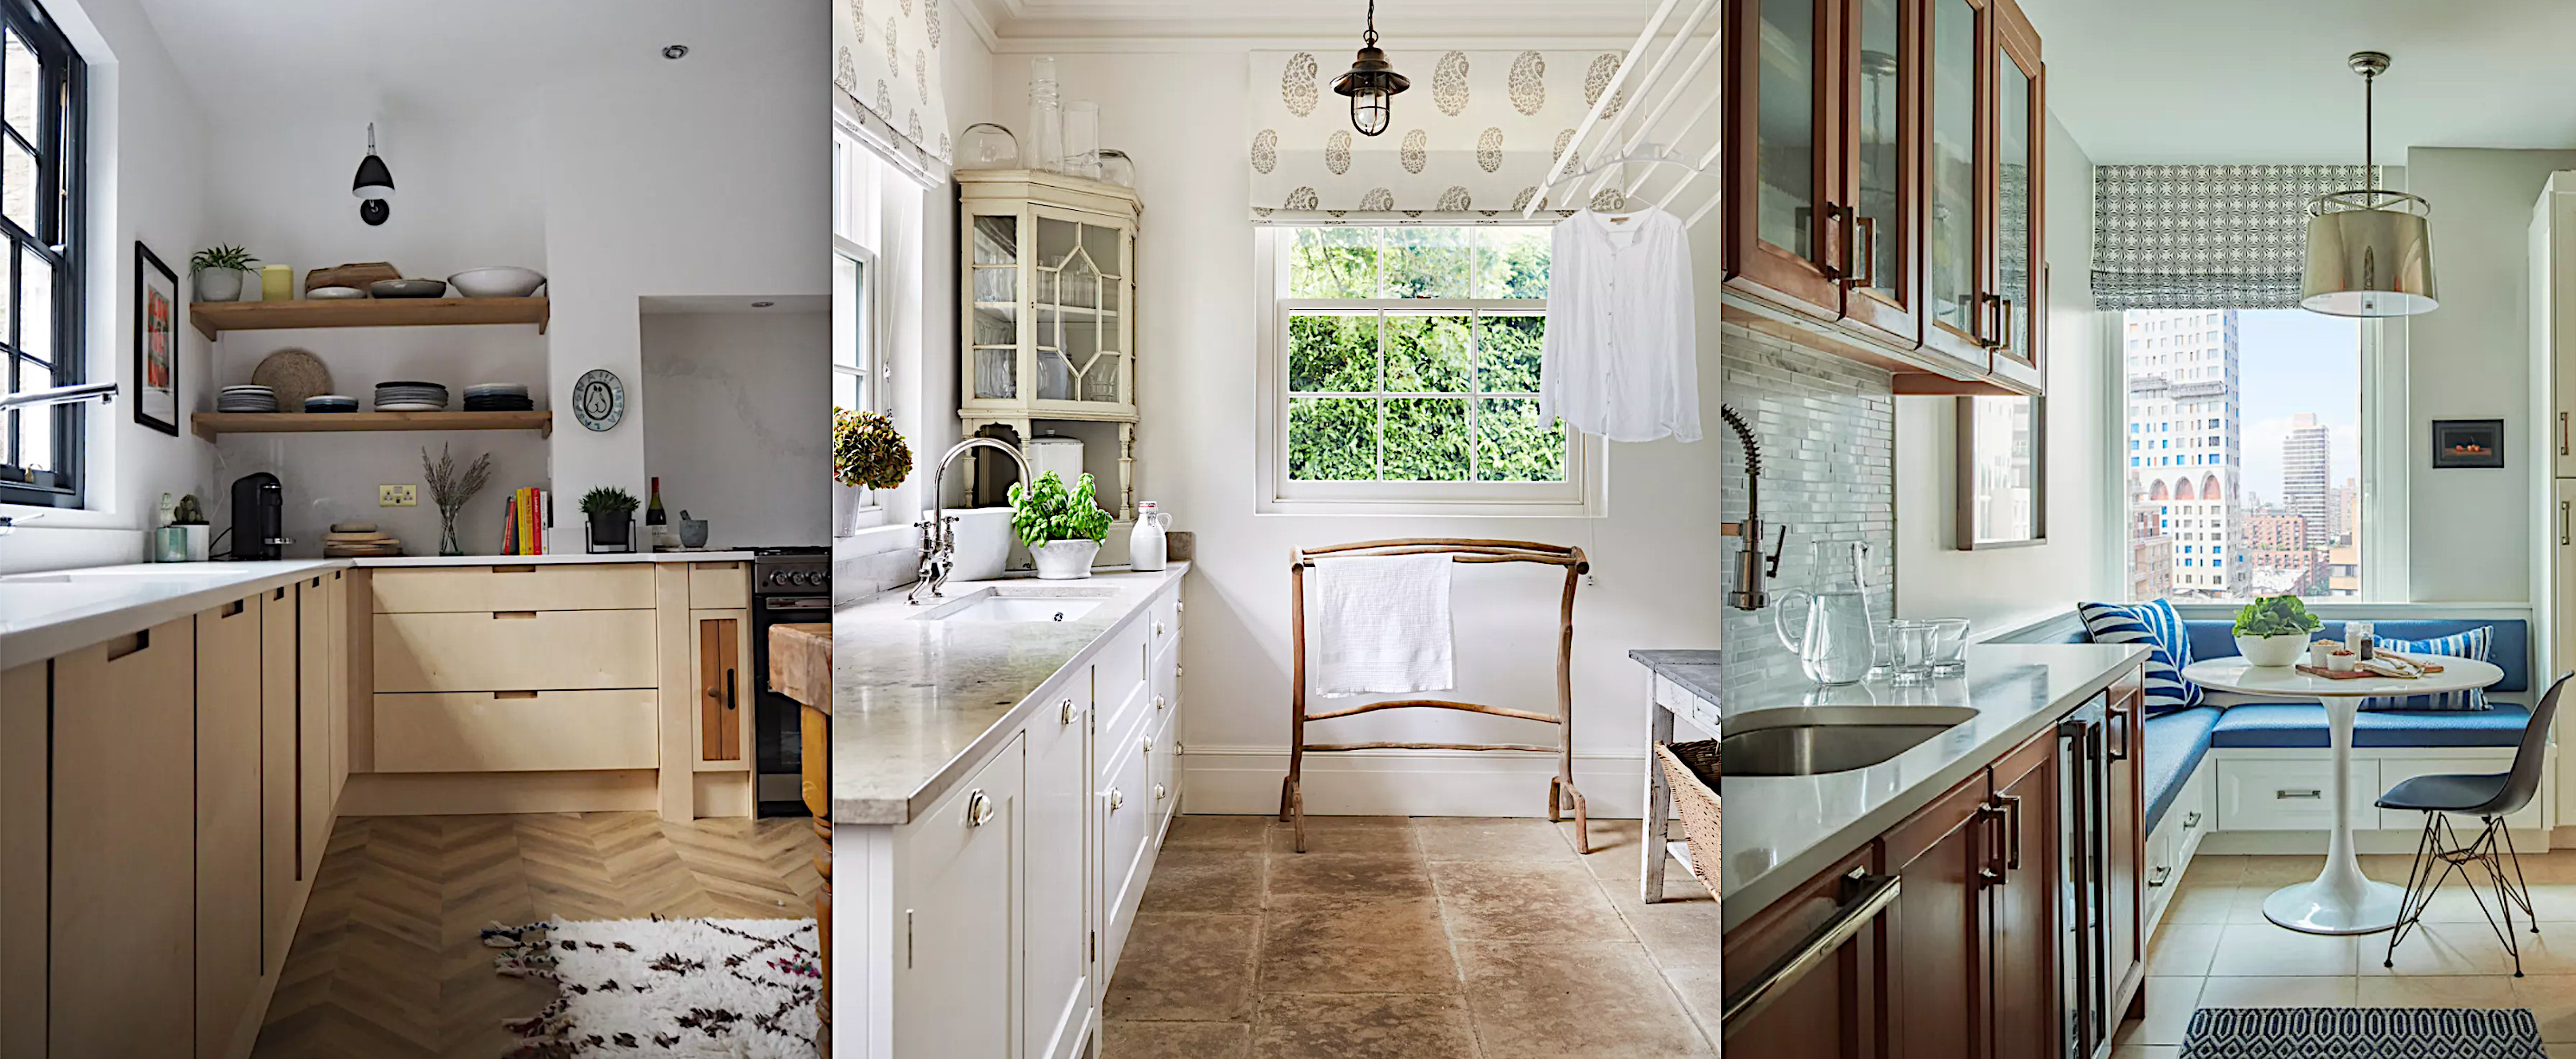 34 small kitchen ideas: compact kitchen design and decor ideas | Homes &  Gardens |